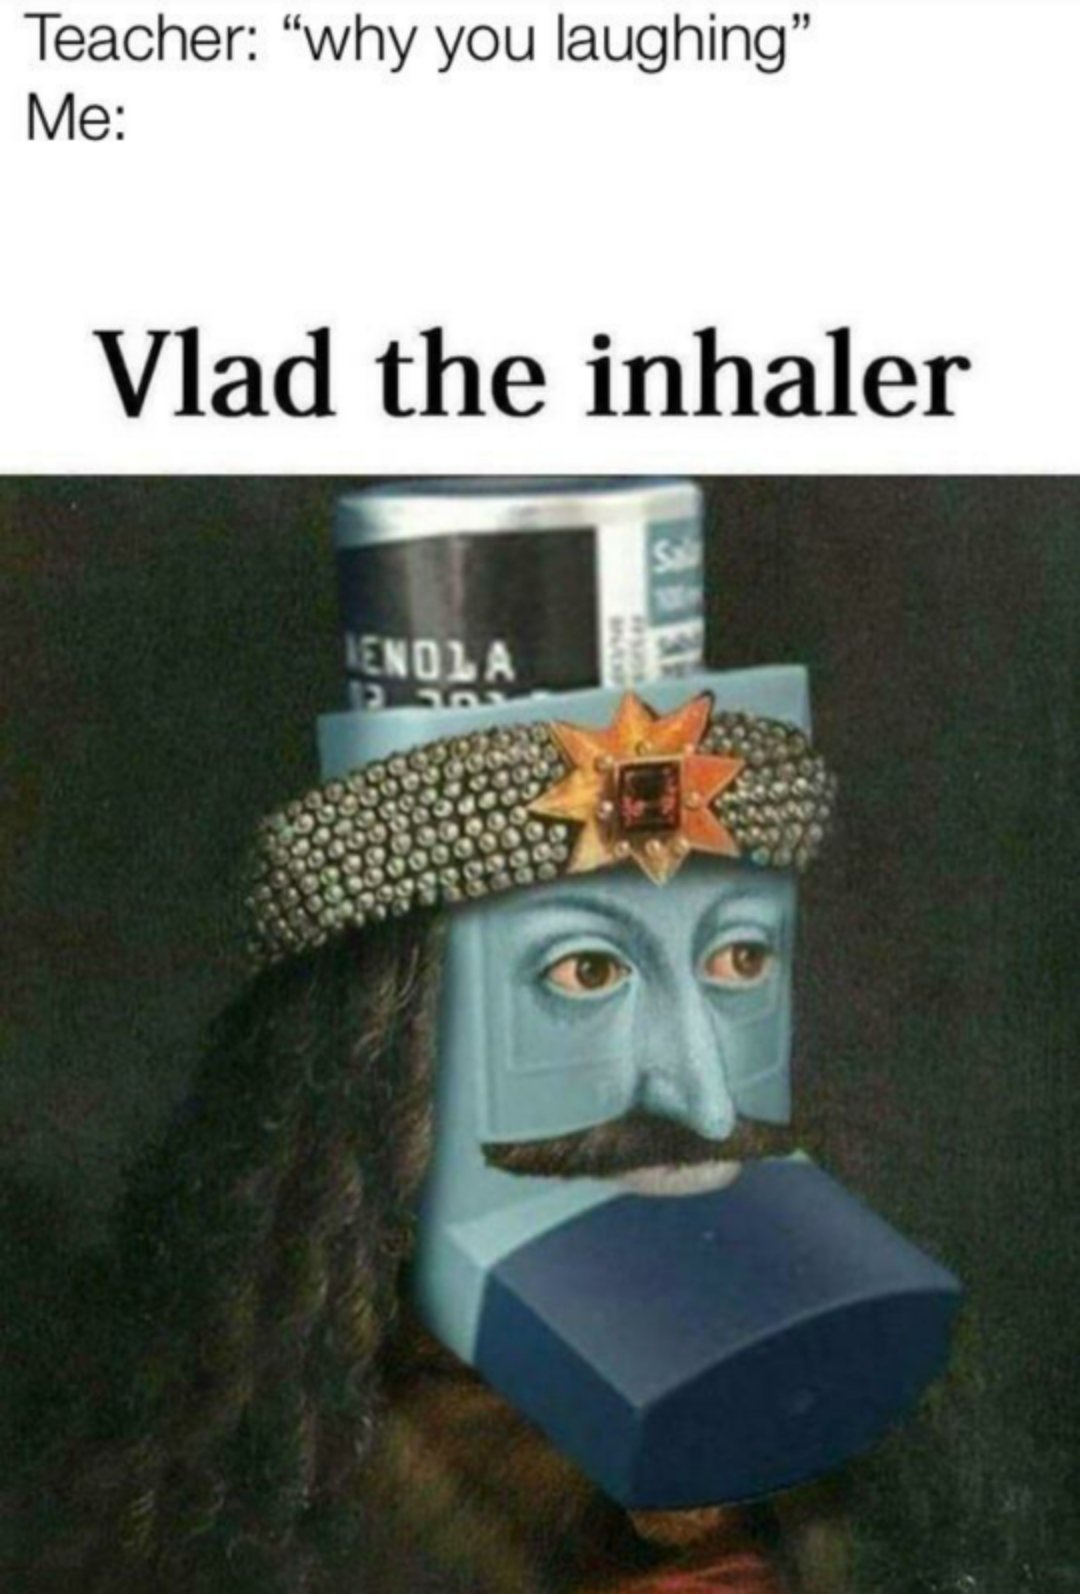 Inhaler man - meme